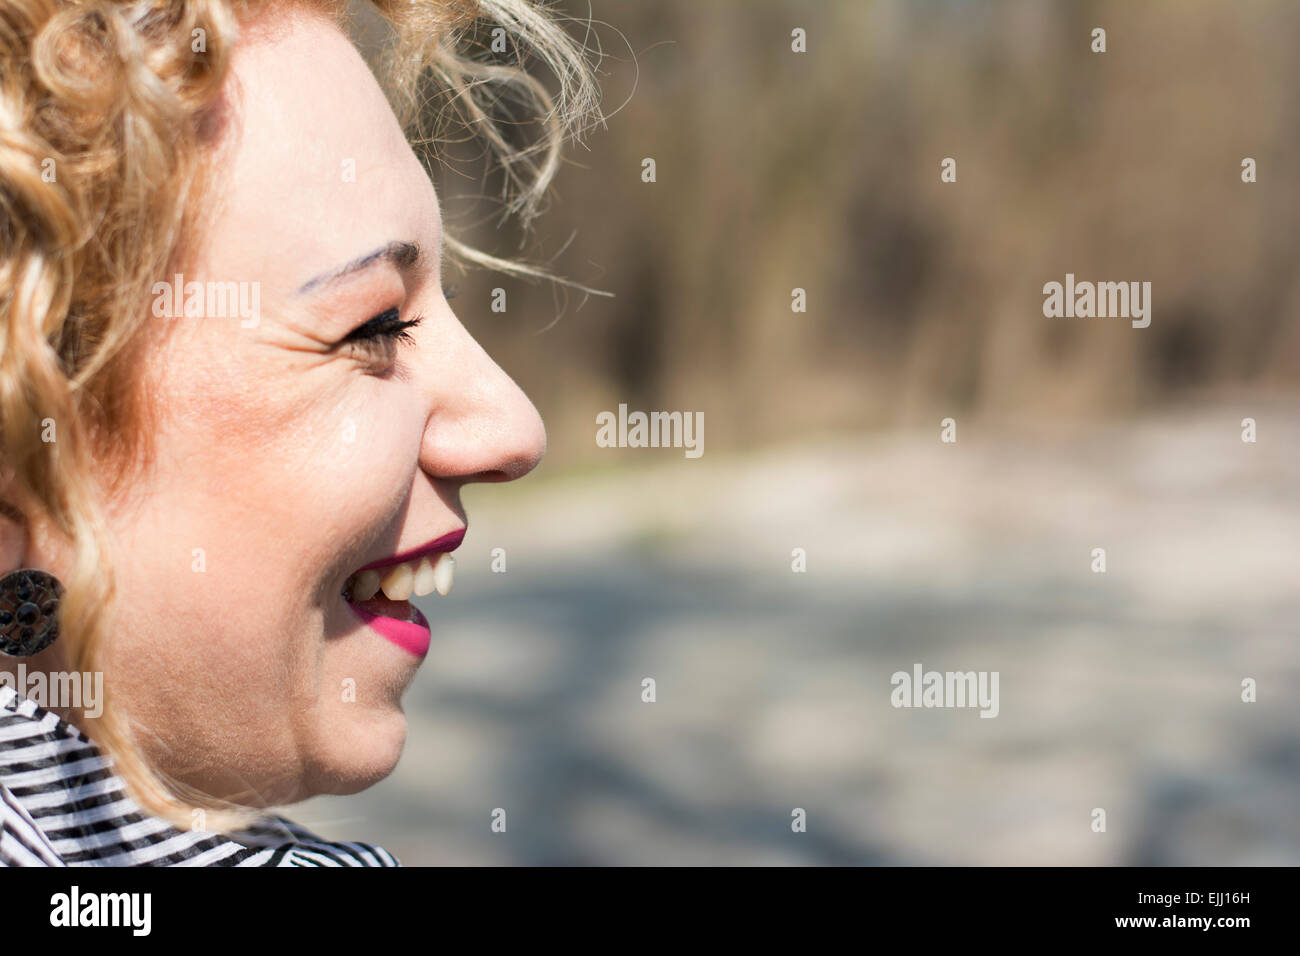 Closeup retrato de una hermosa mujer joven con cabello rizado rubio risa Foto de stock